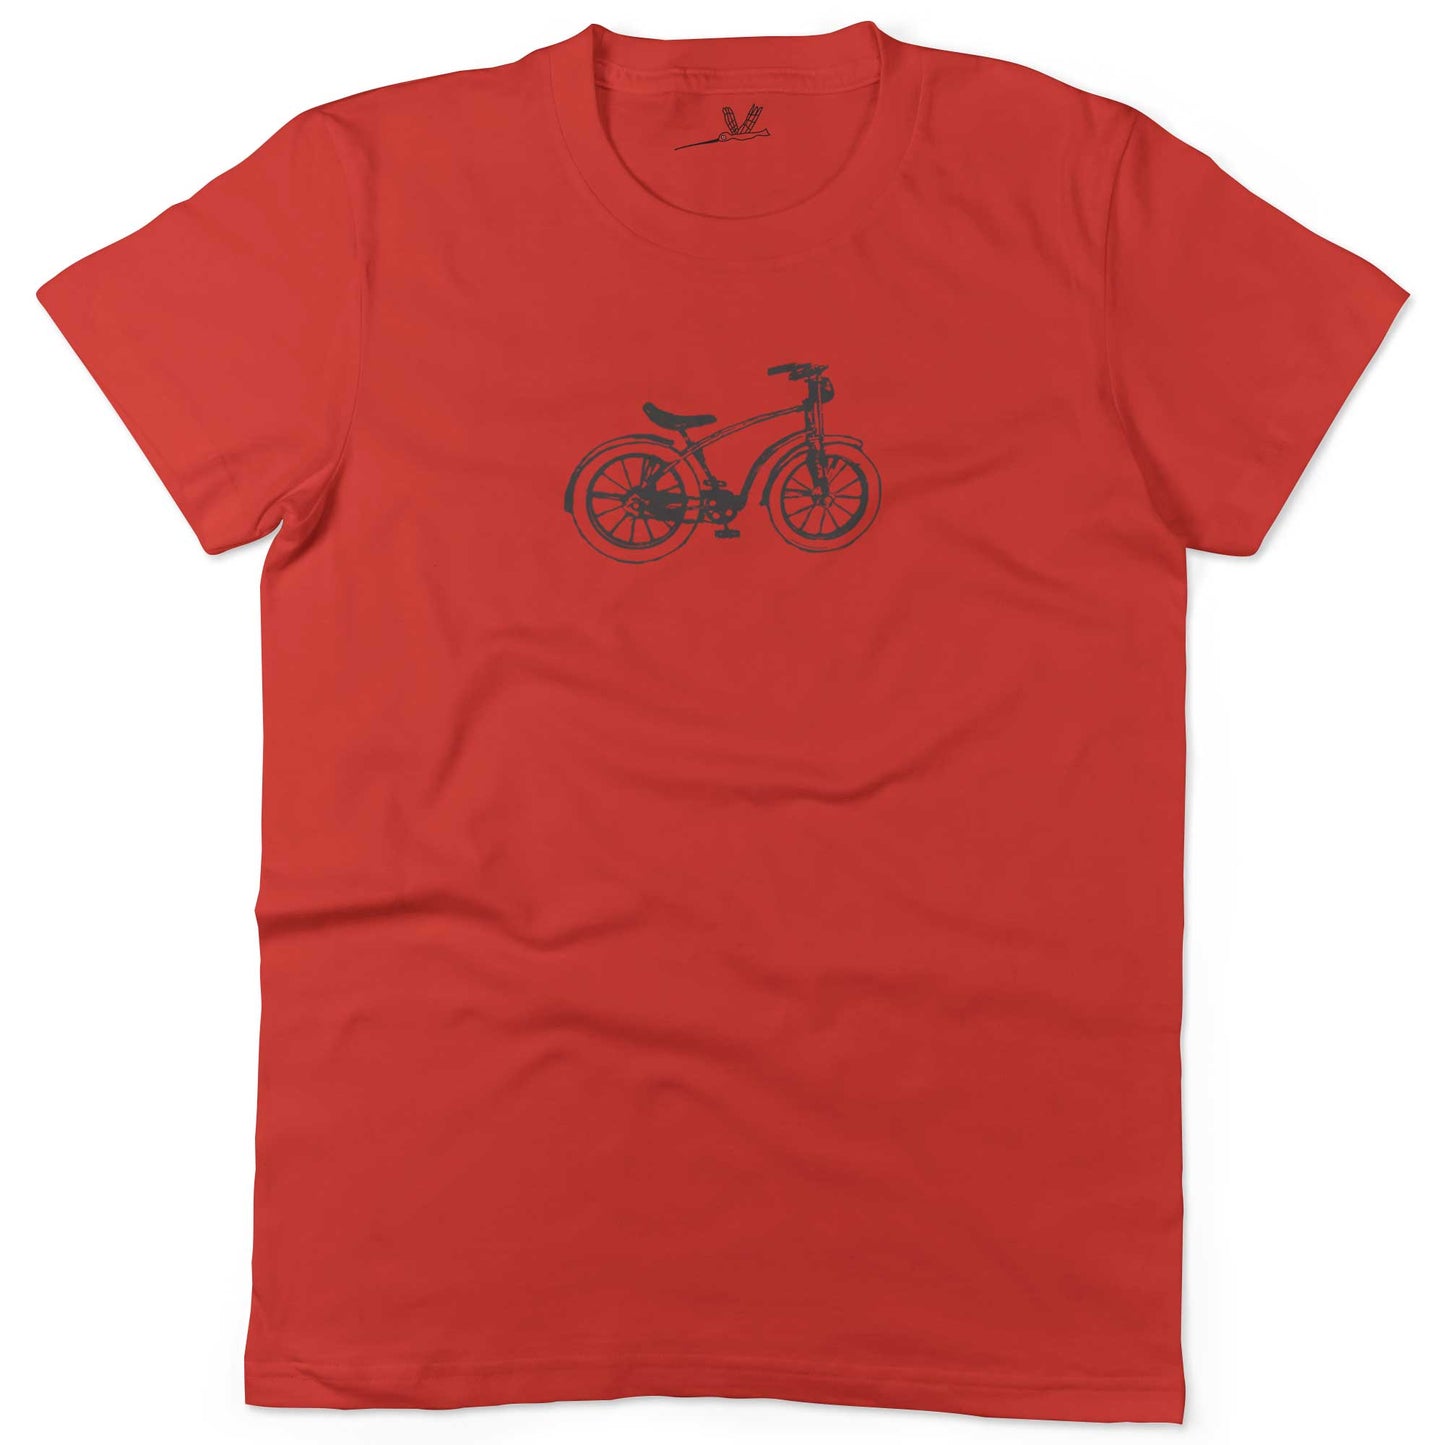 Vintage Bike Unisex Or Women's Cotton T-shirt-Red-Woman